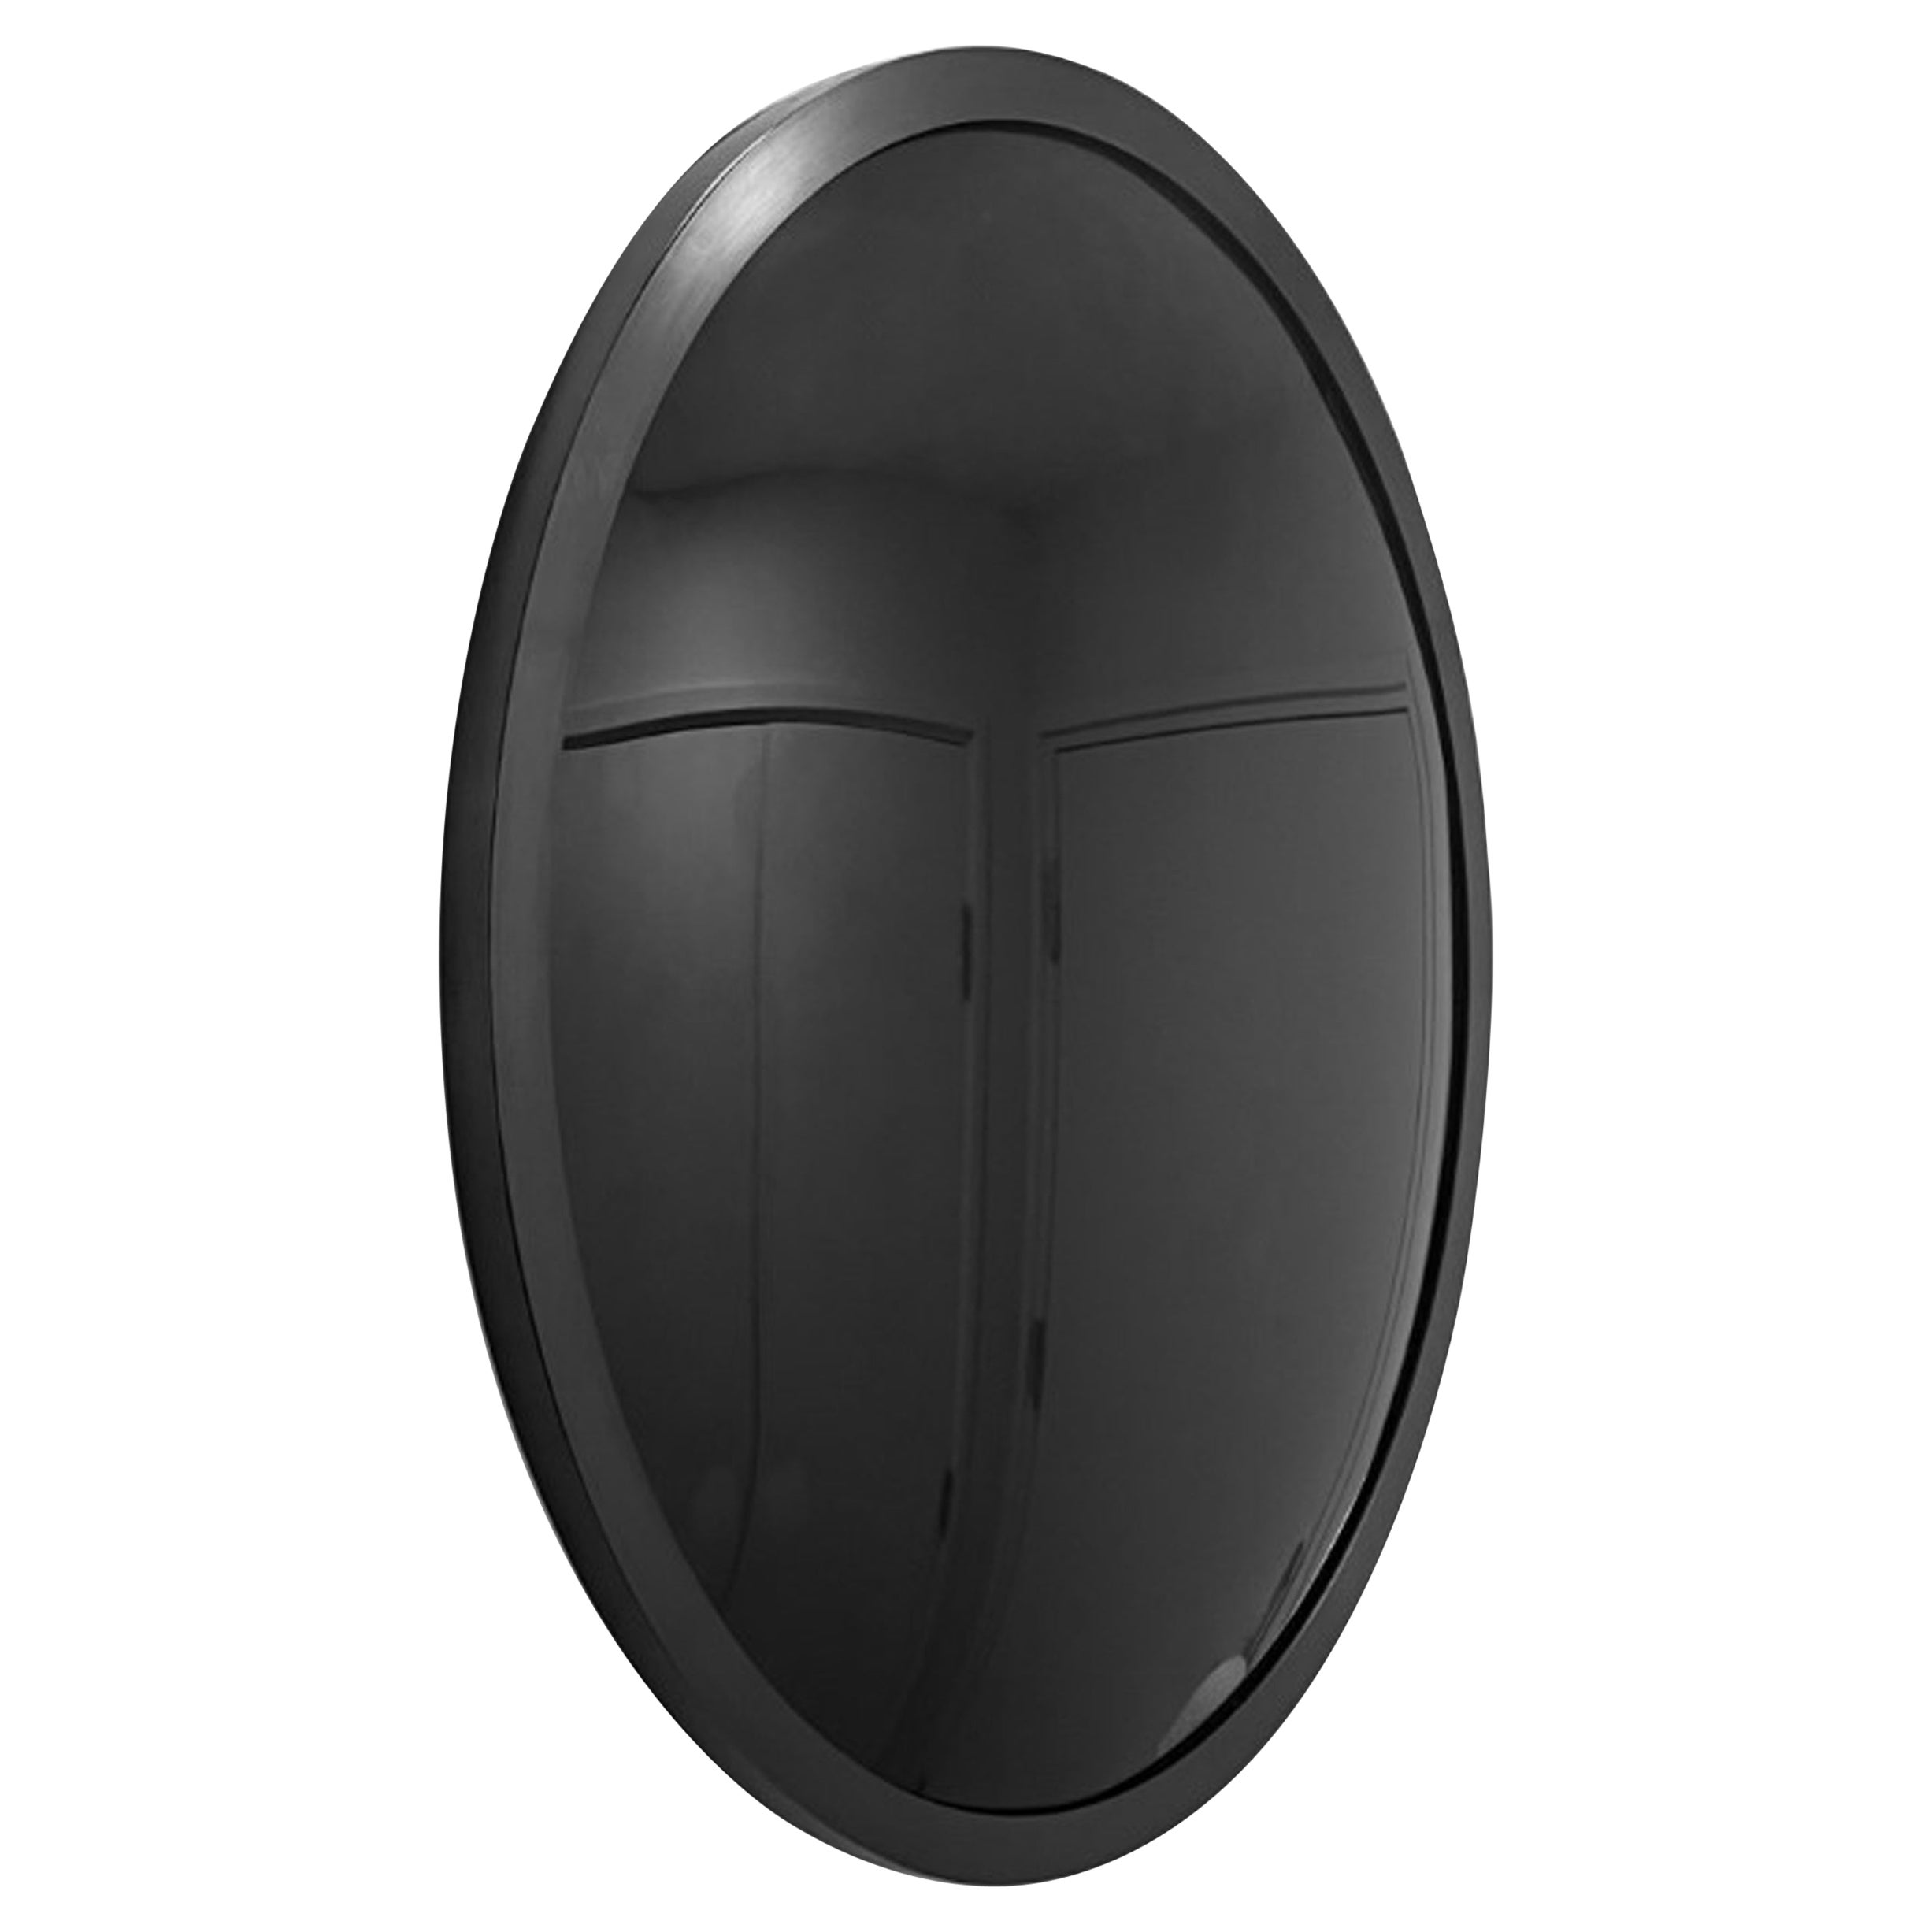 Orbis Round Black Tinted Convex Decorative Mirror, Blackened Metal Frame, Large